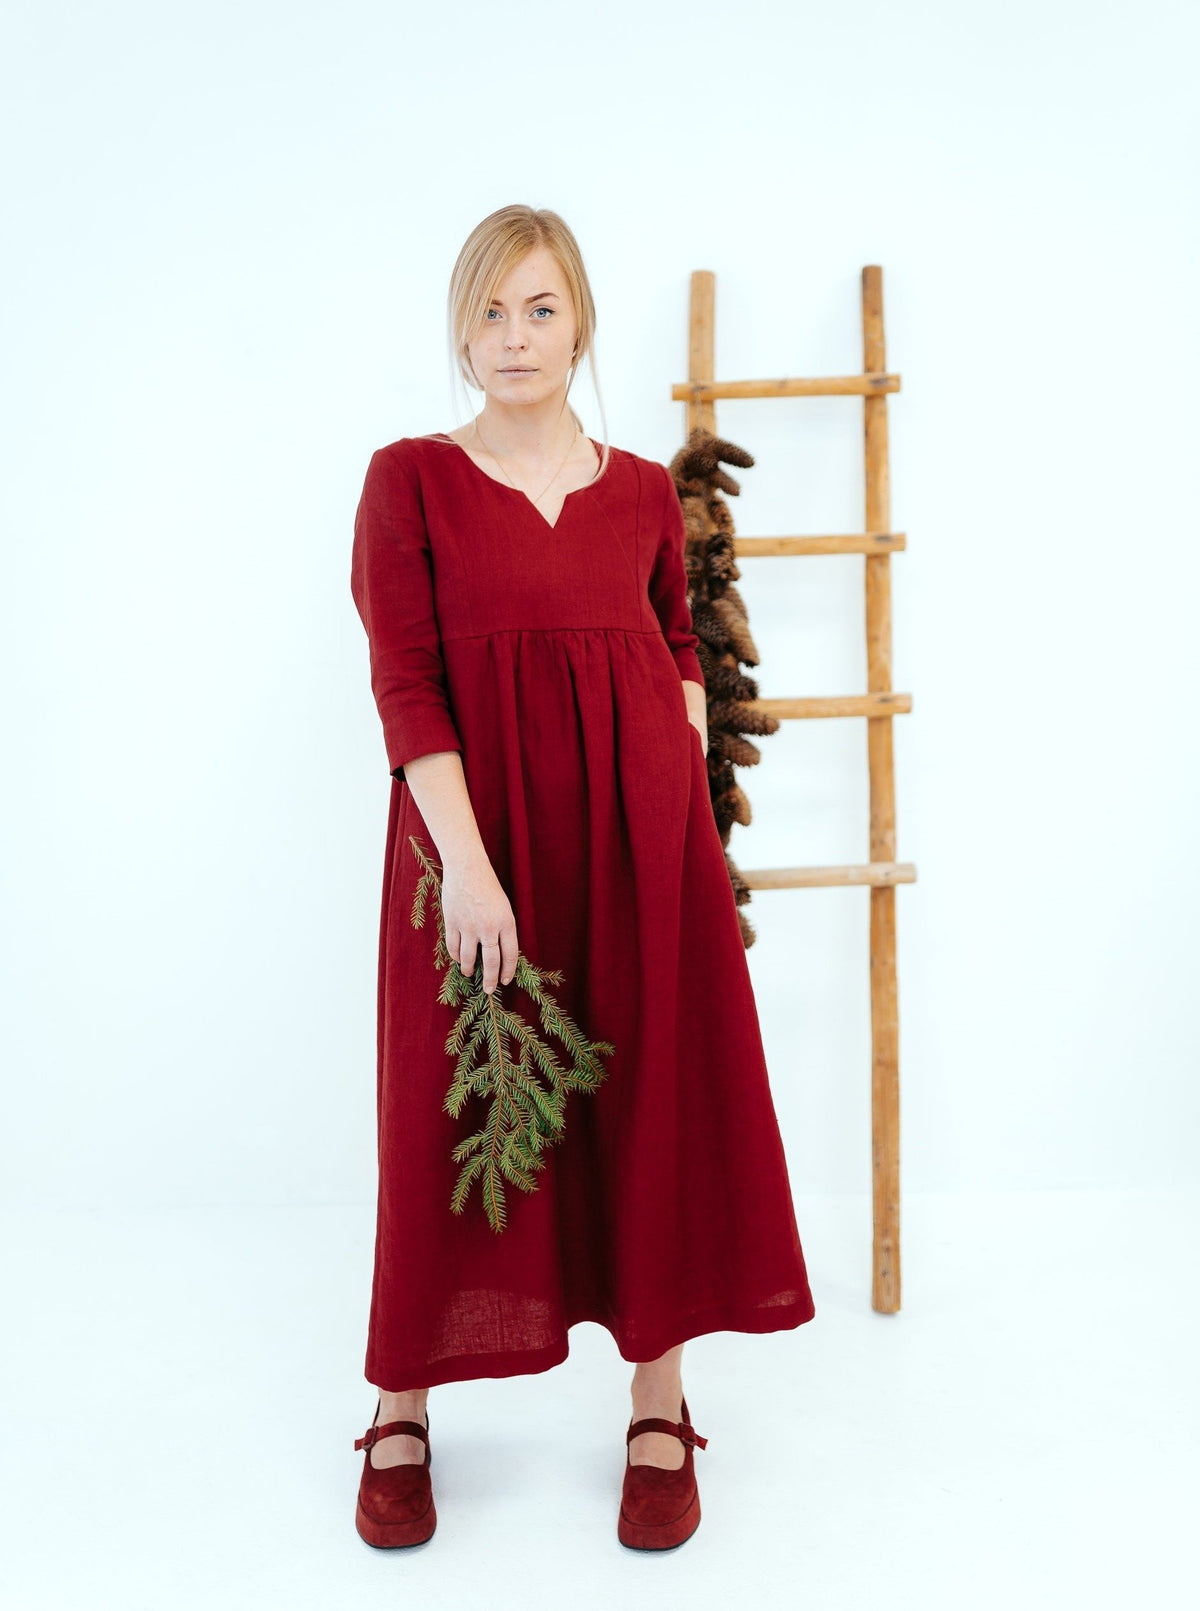 Plus size linen tunic dress 'Gemma', custom sized linen dresses - Linenbee